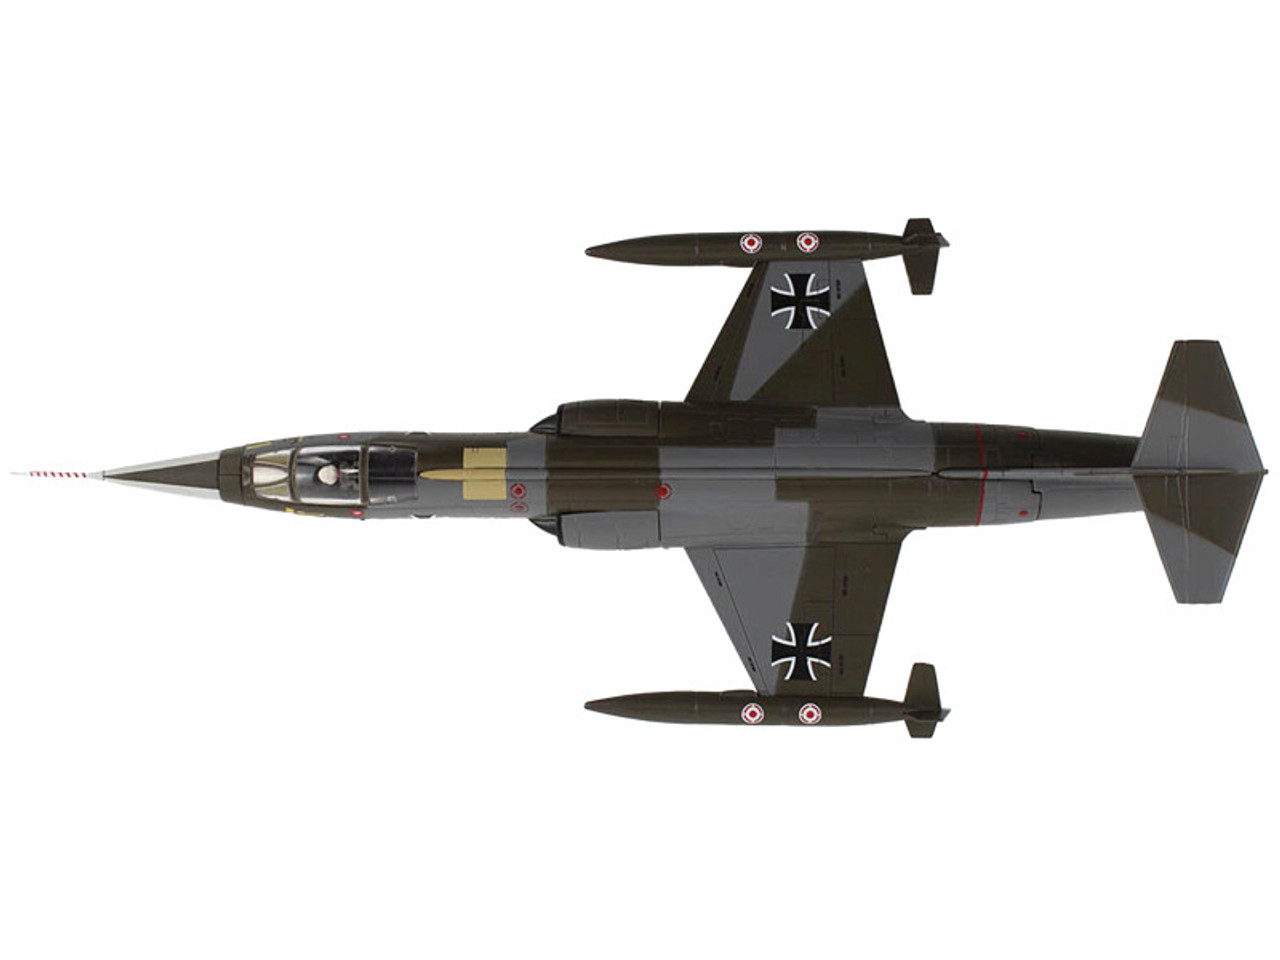 Lockheed RF-104G Starfighter Fighter Aircraft "AG 51 Immelmann" (1966) German Luftwaffe "Air Power Series" 1/72 Diecast Model by Hobby Master